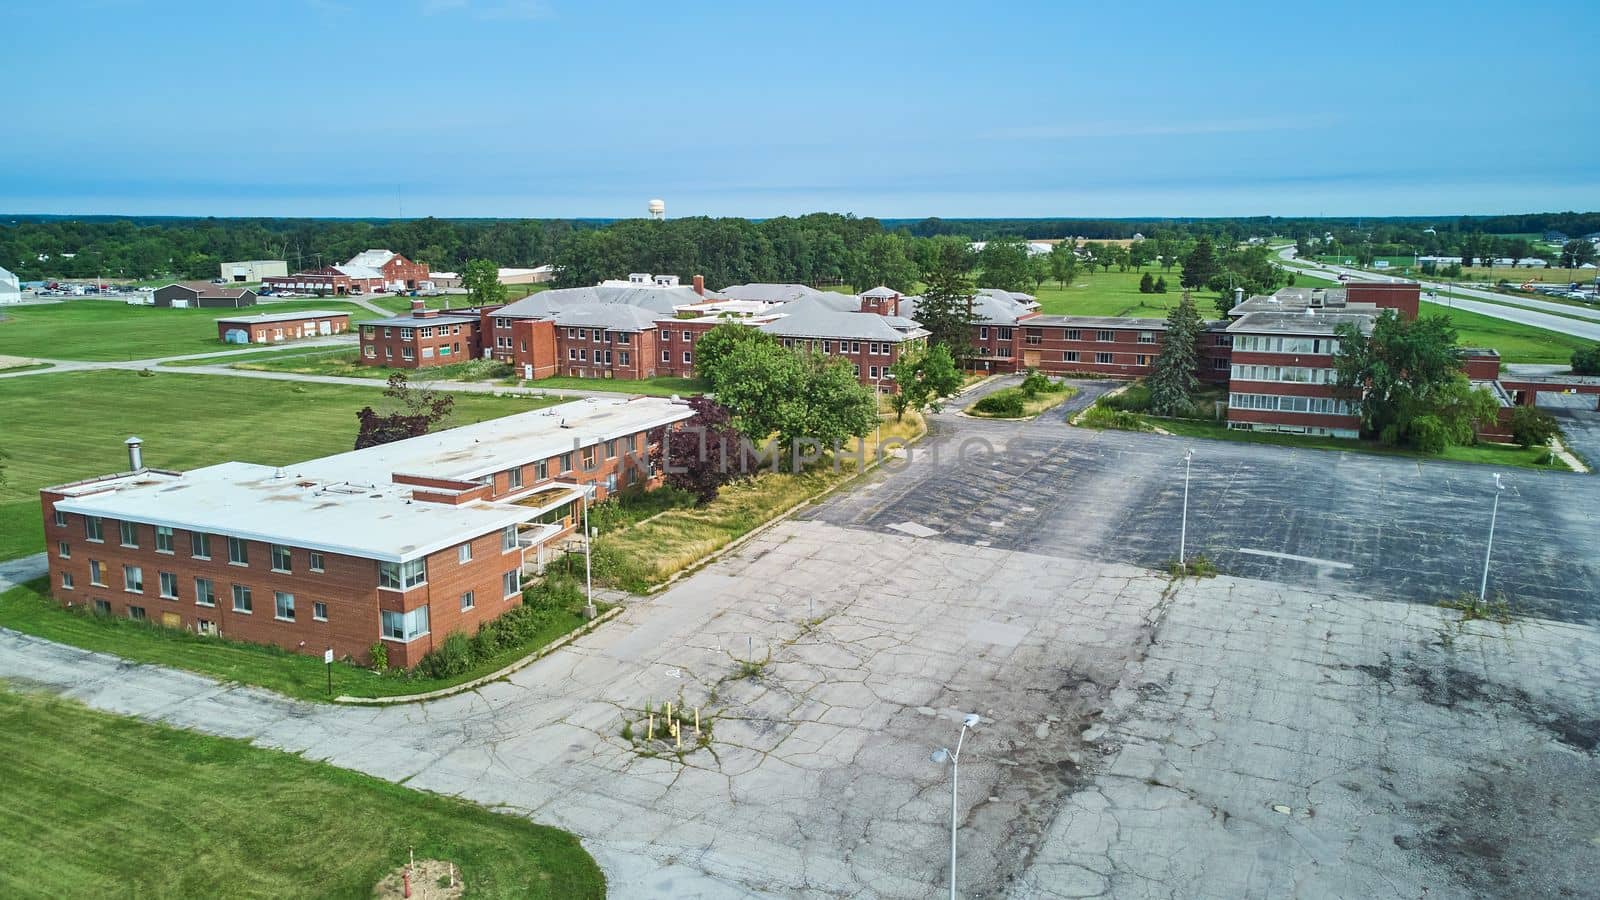 Image of Aerial over huge abandoned brick hospital in Indiana